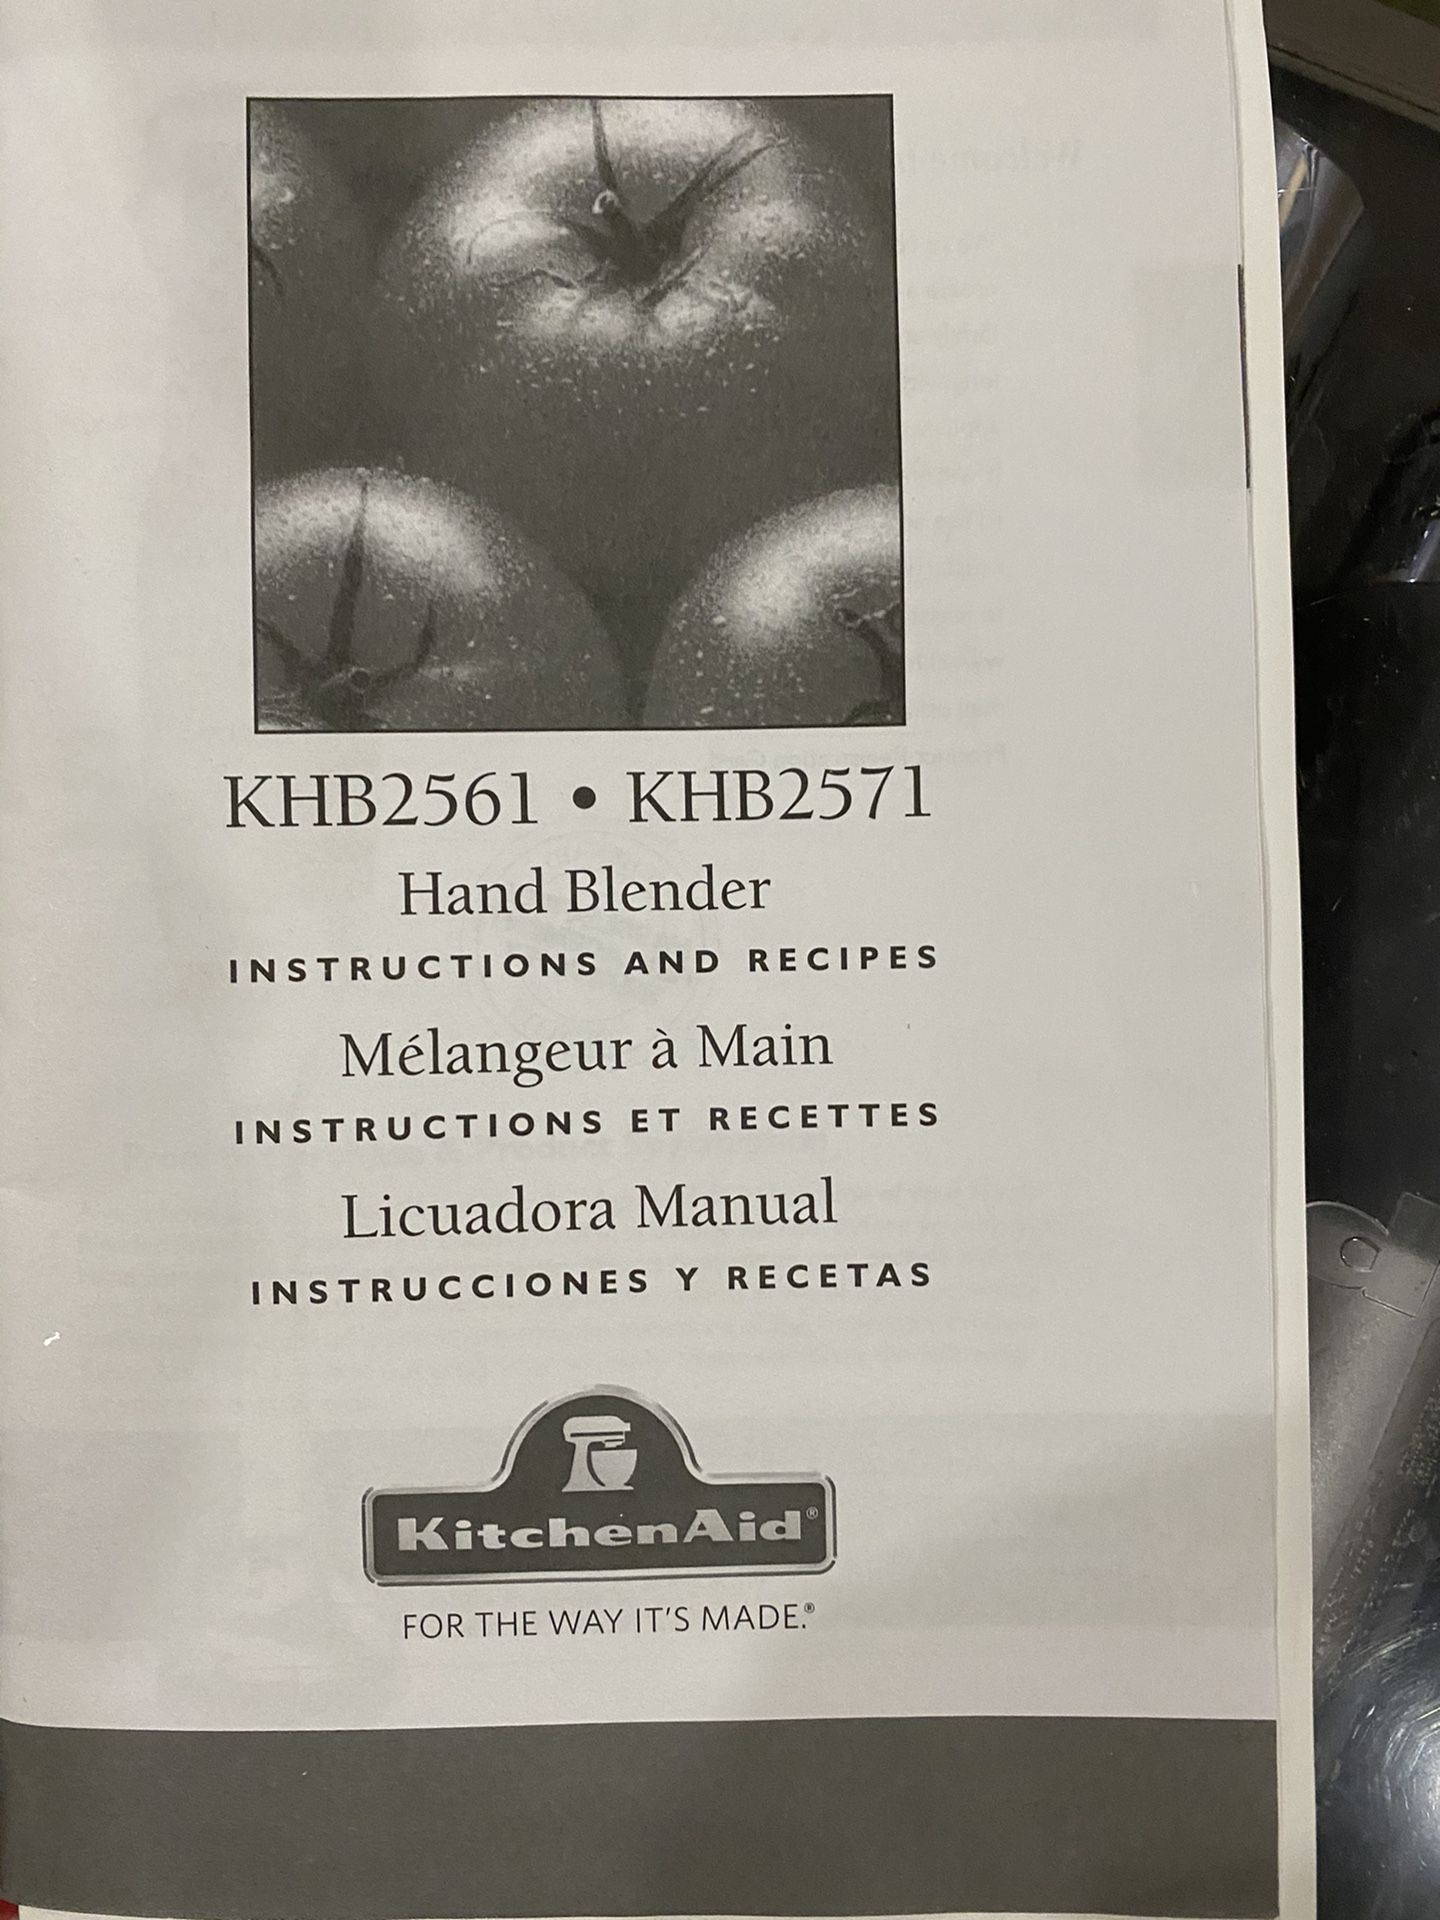 Kitchen aid hand blender KHB2561